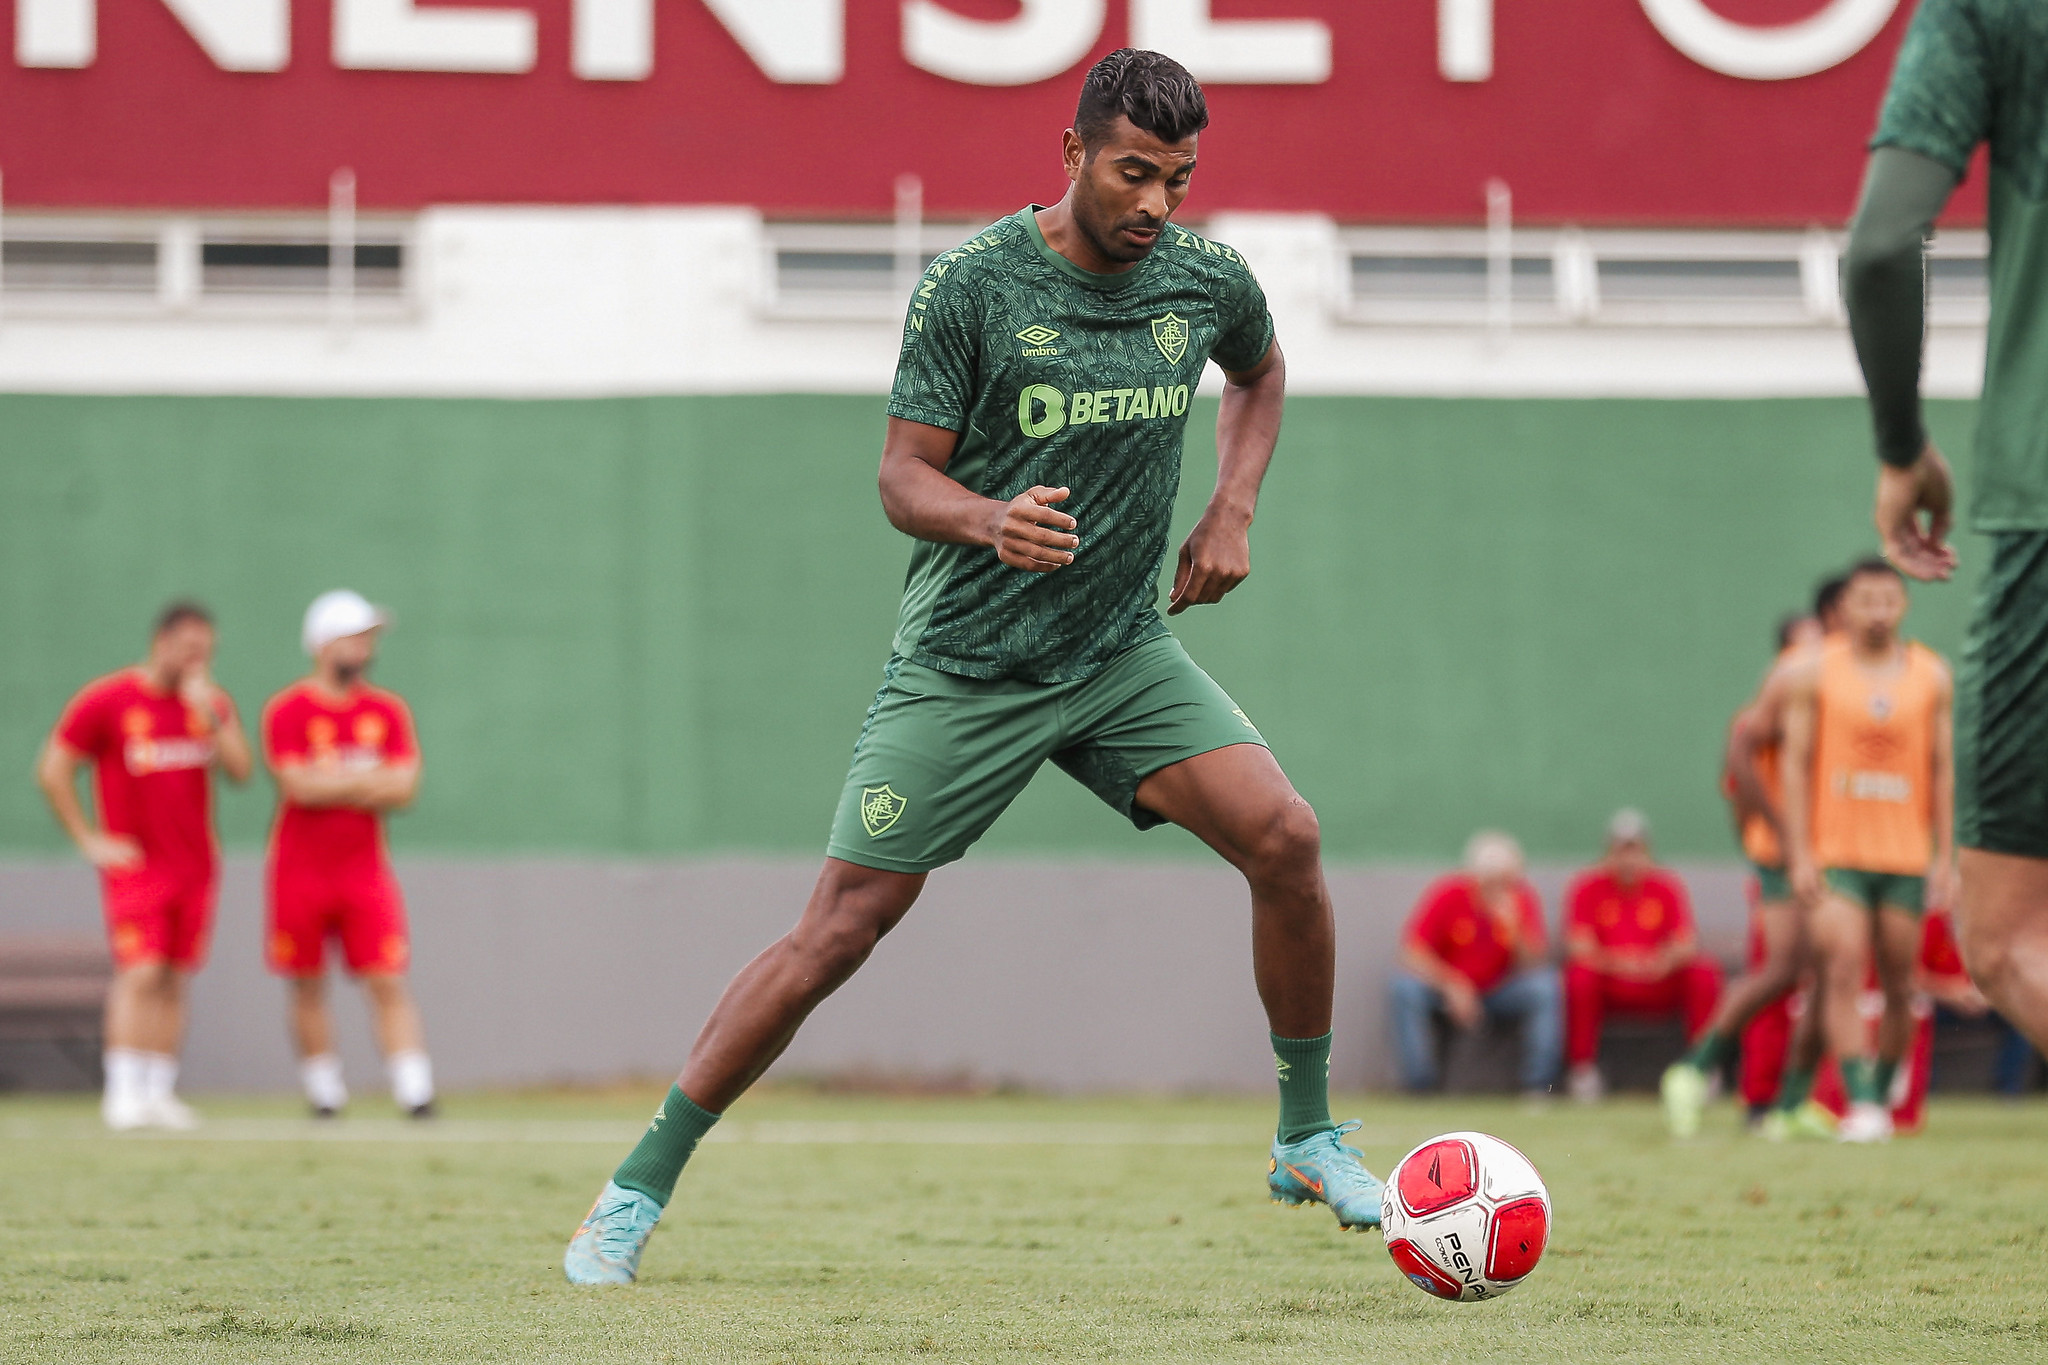 Thiago Santos durante treinamento no Fluminense